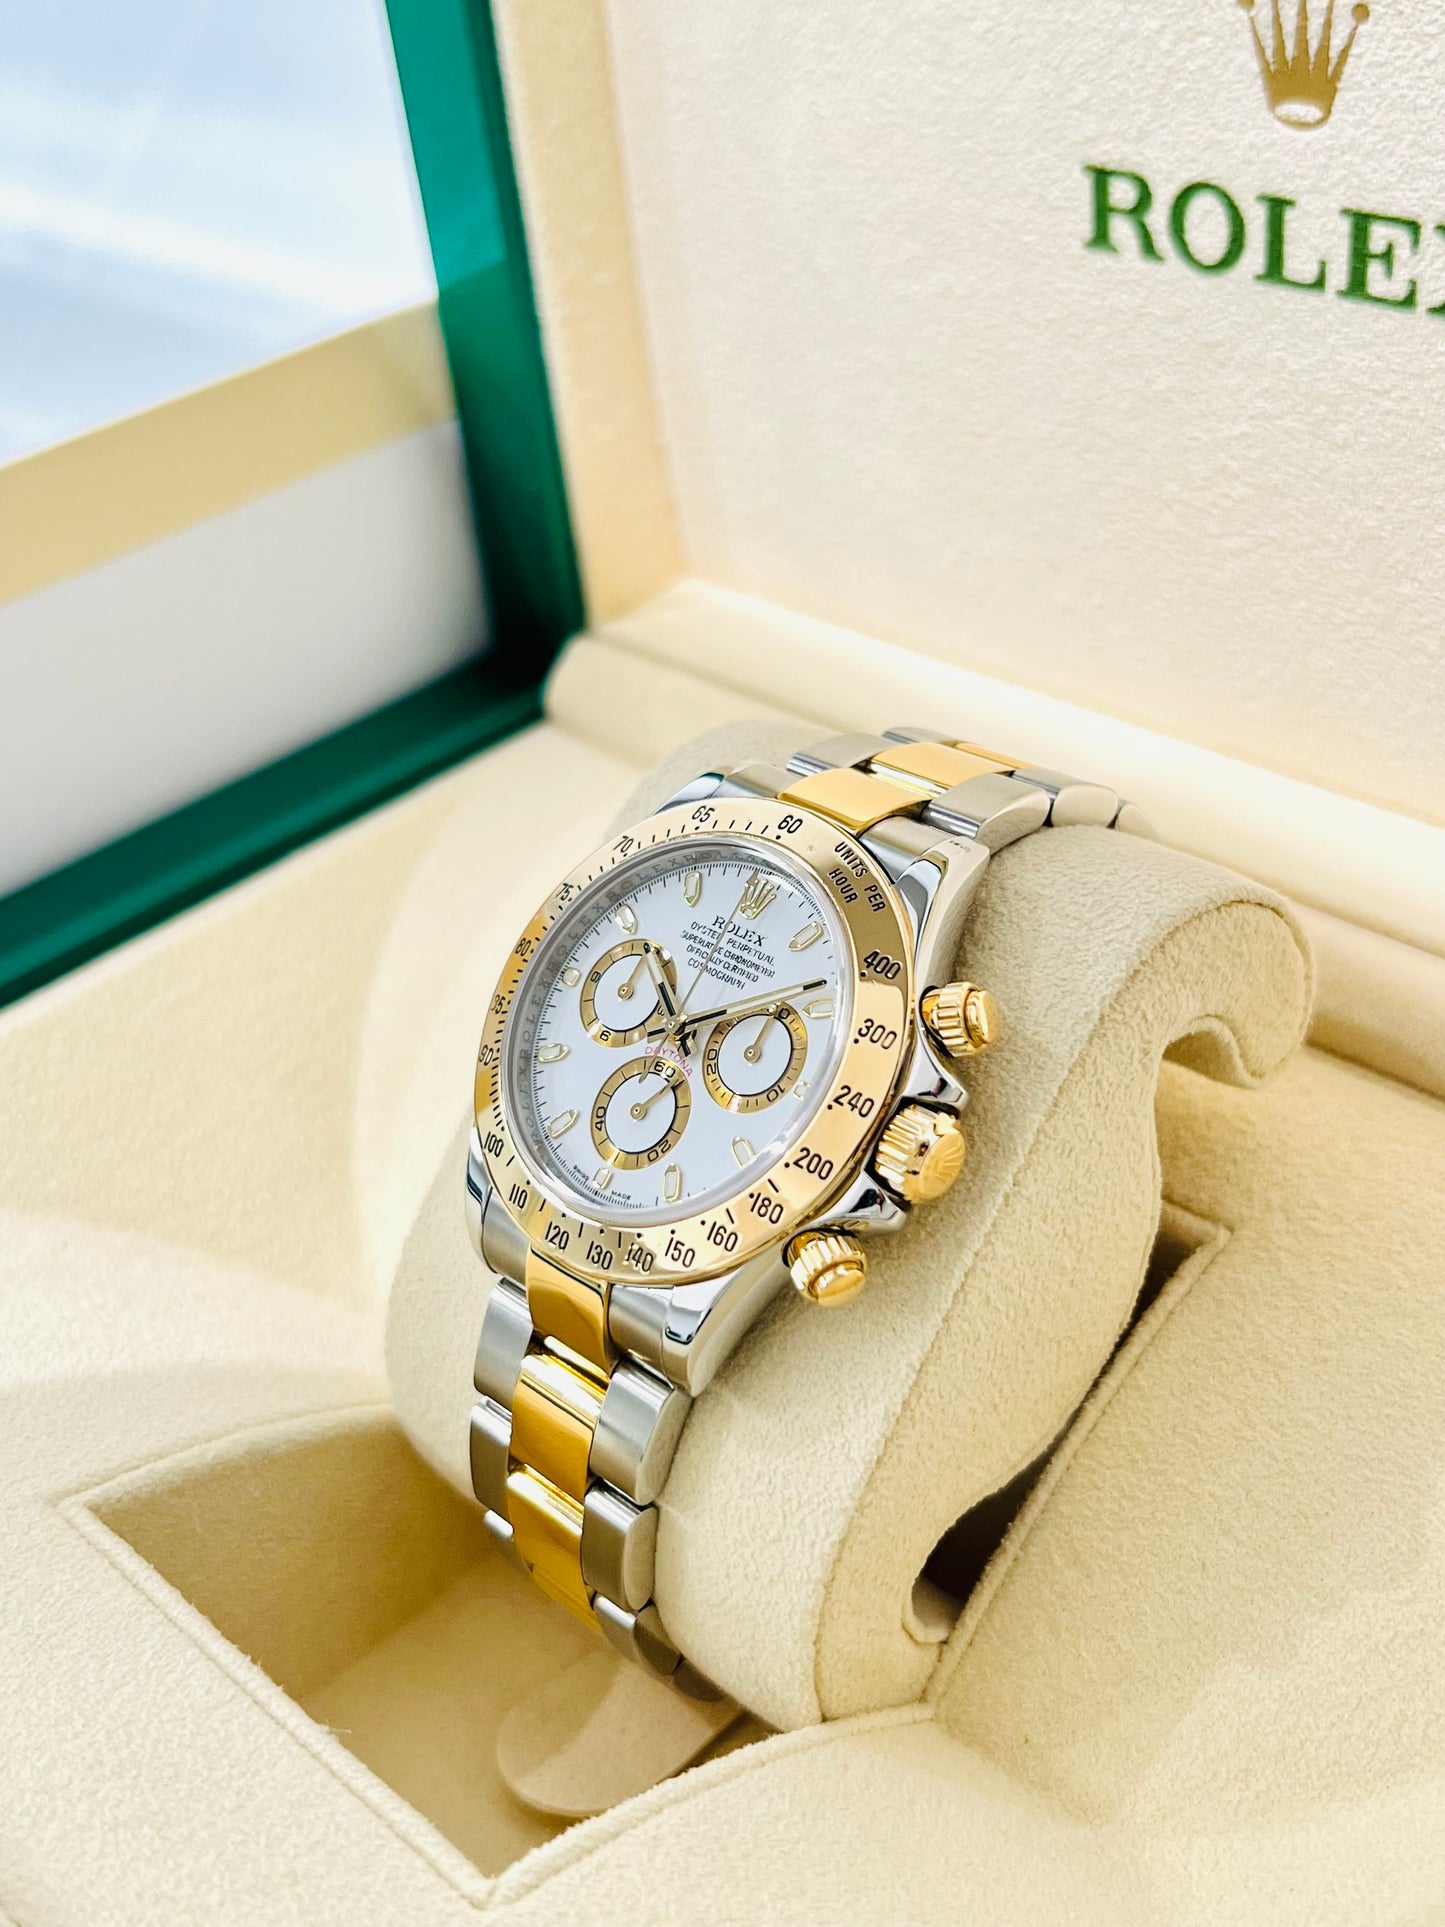 Rolex Cosmograph Daytona 40mm White Dial Two Tone Men's Luxury Watch Model #116523